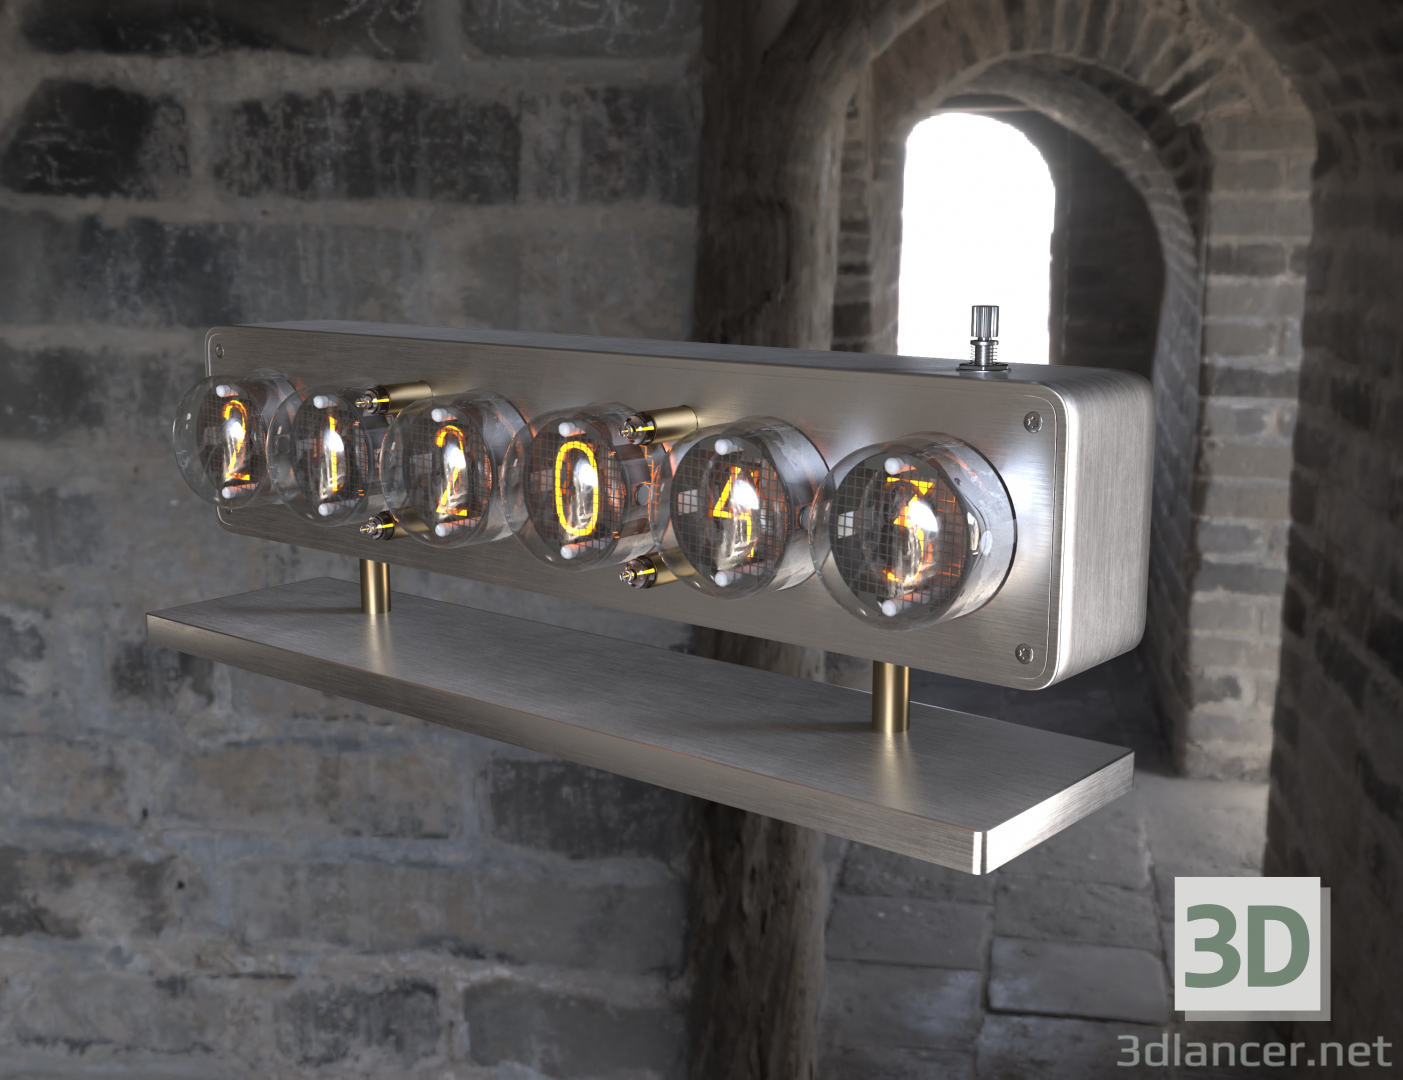 modèle 3D de Horloge sur lampes IN-4.IN4 Glow Tube Nixie Electron Tube Clock acheter - rendu